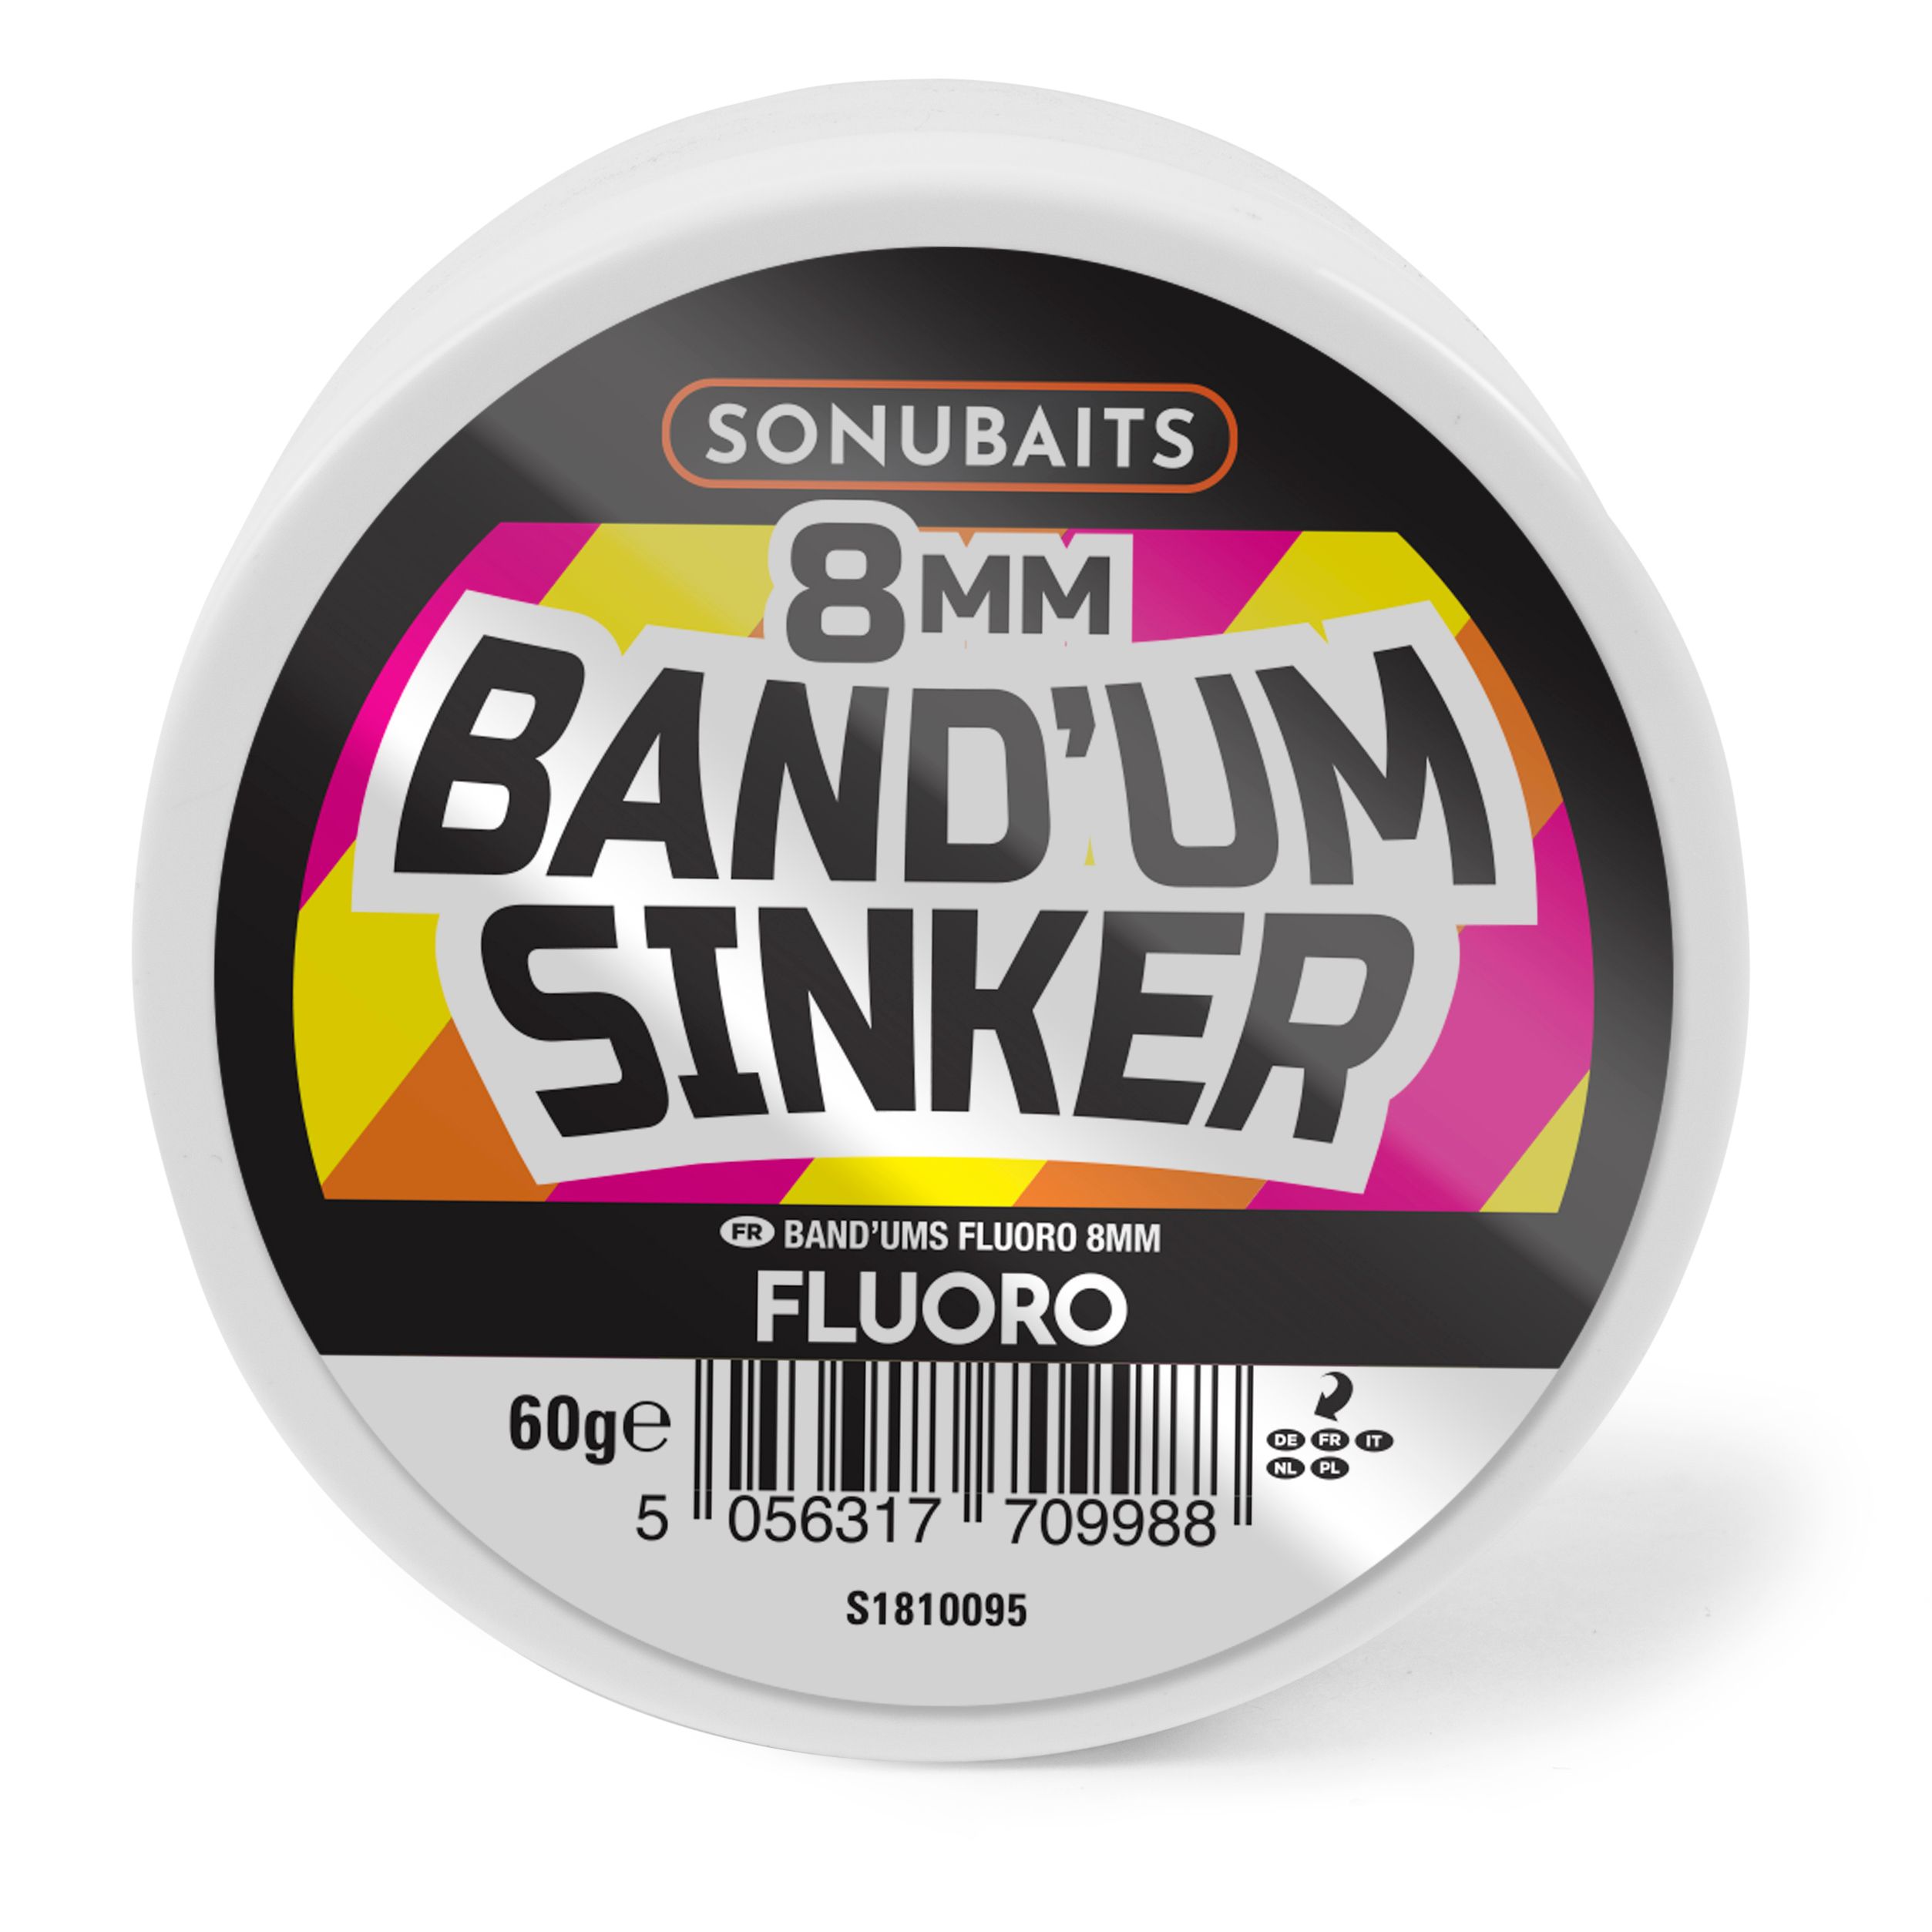 Sonubaits Band'um Sinker Boilies para Pez Blanco 8mm - Fluoro